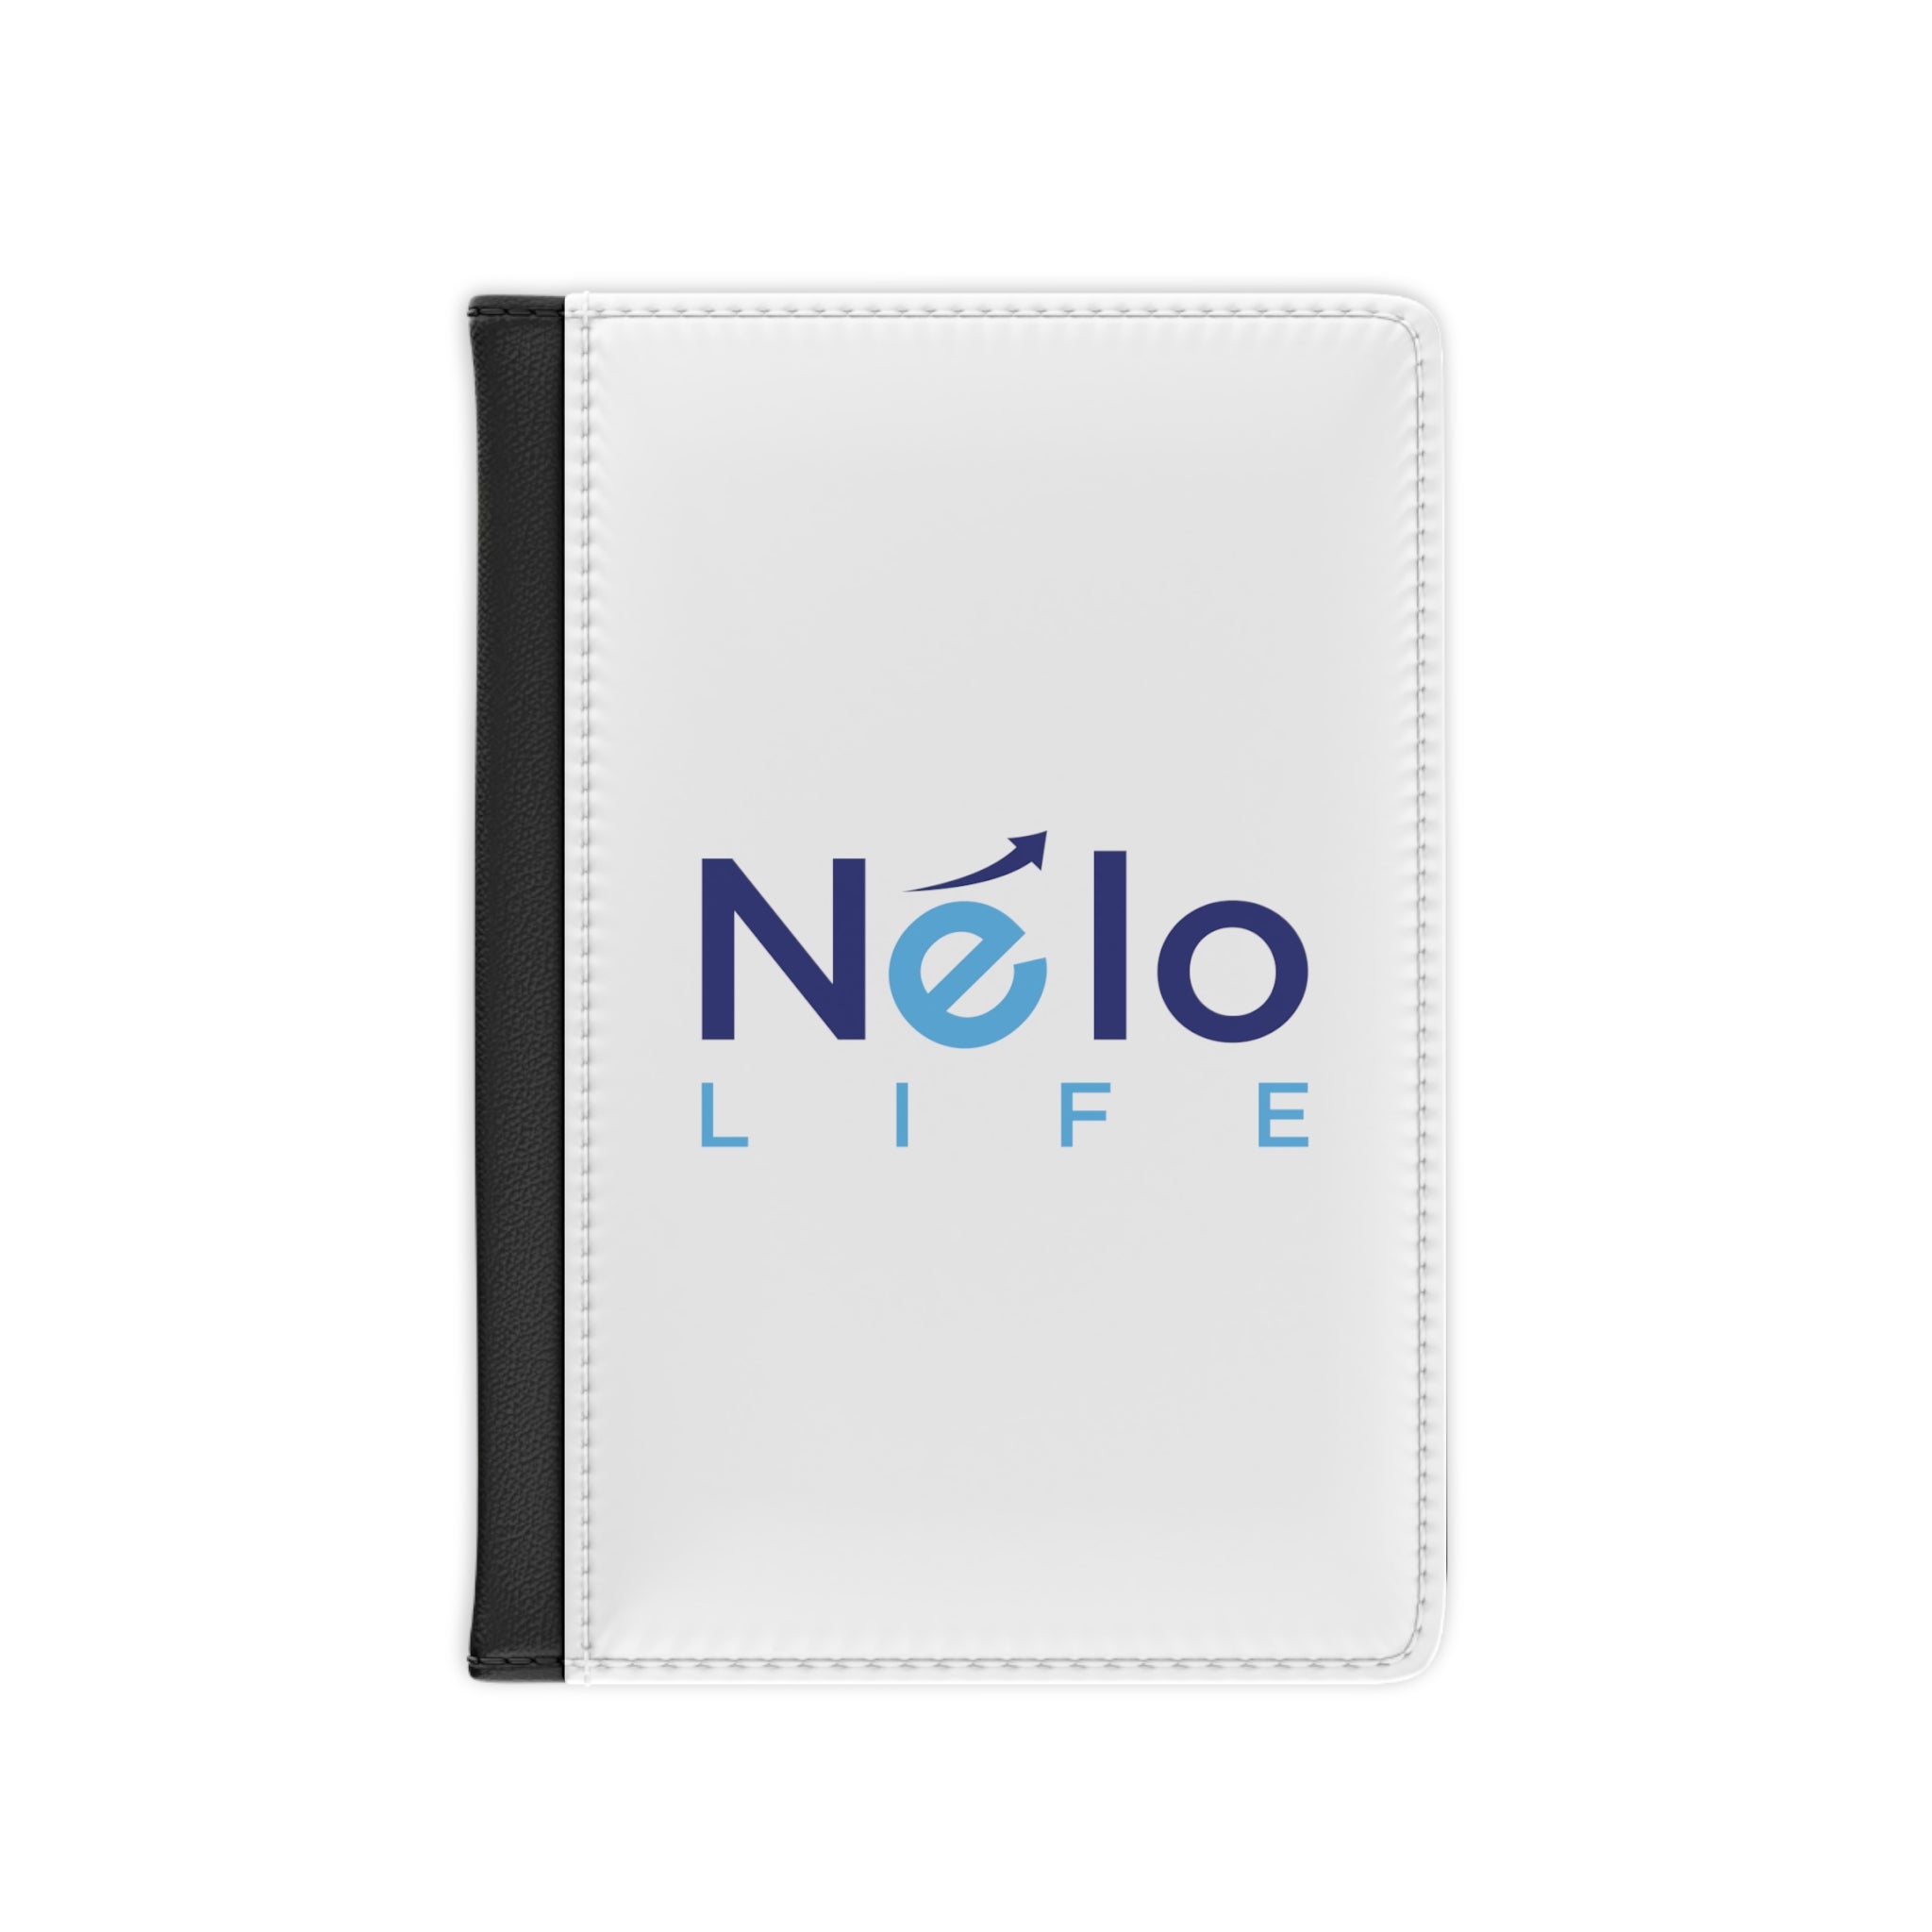 NELO LIFE Passport Cover